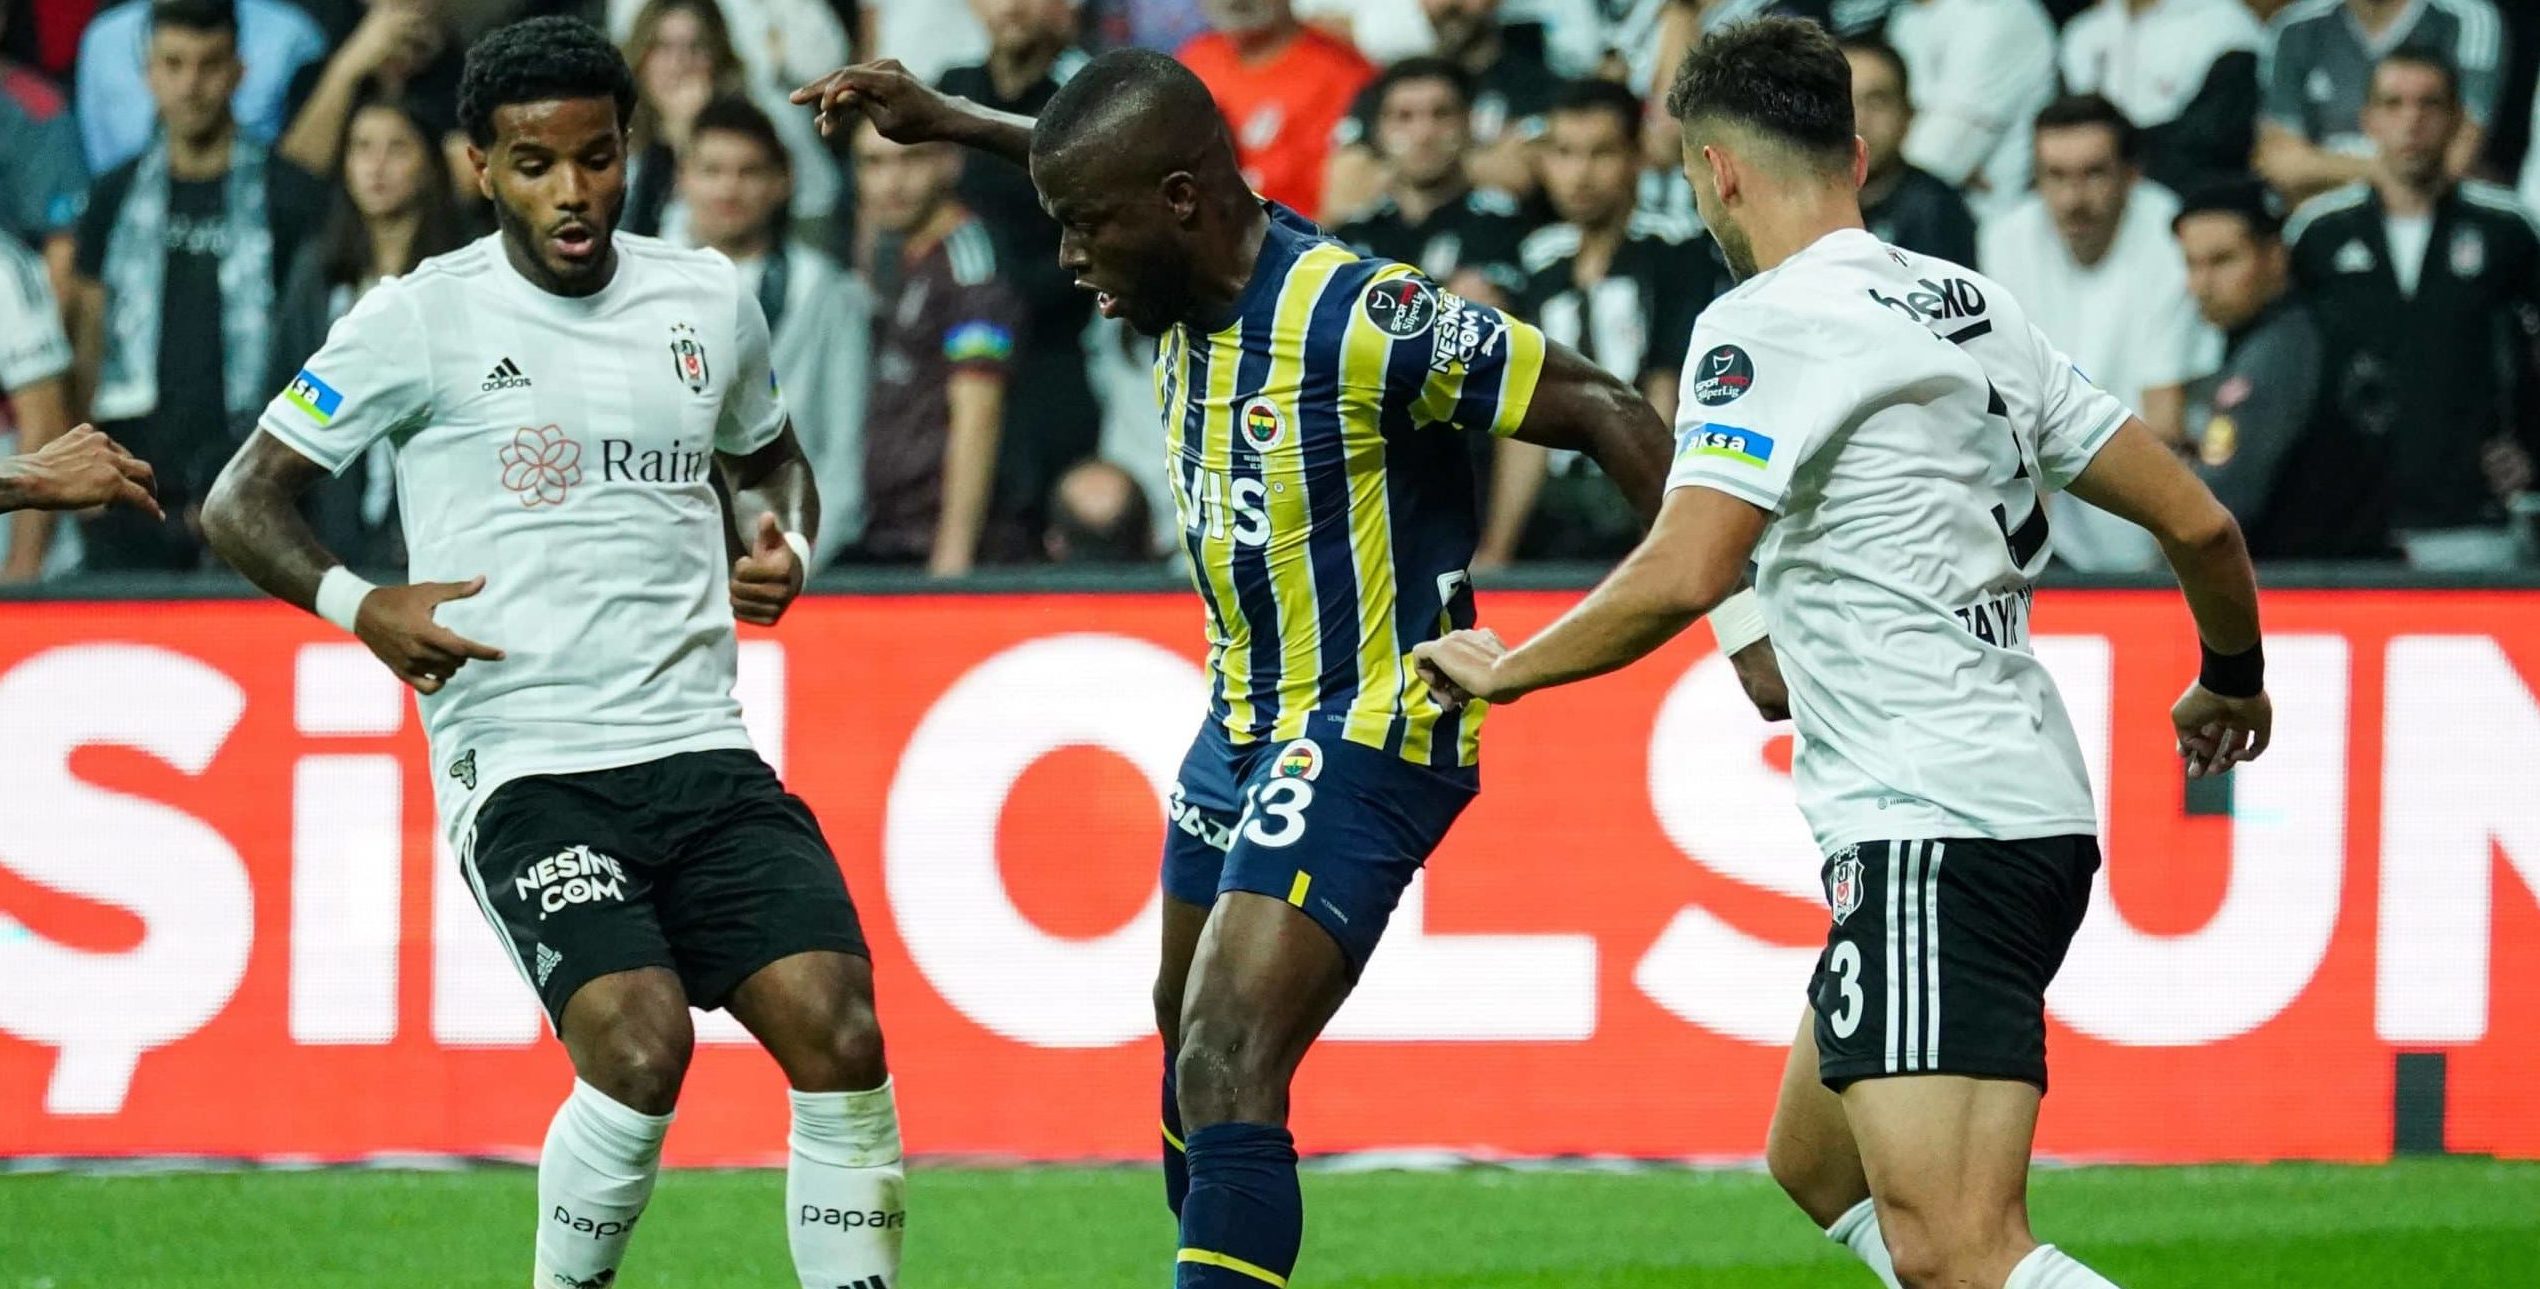 Ankaragücü vs. Fenerbahçe: A Clash of Turkish Football Titans